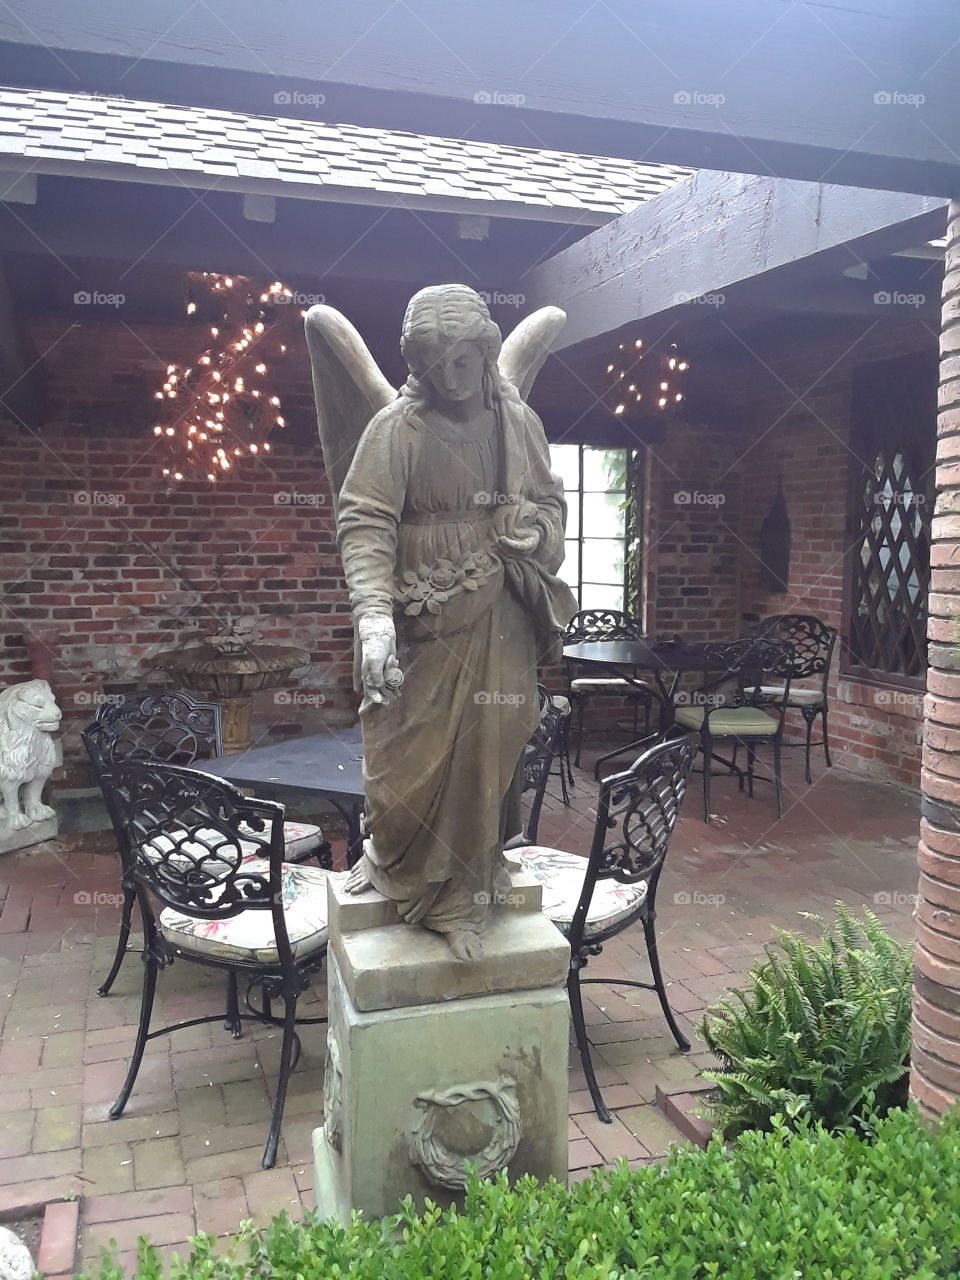 Vivilore restraurant Independence Missouri garden patio dining room Angel statue